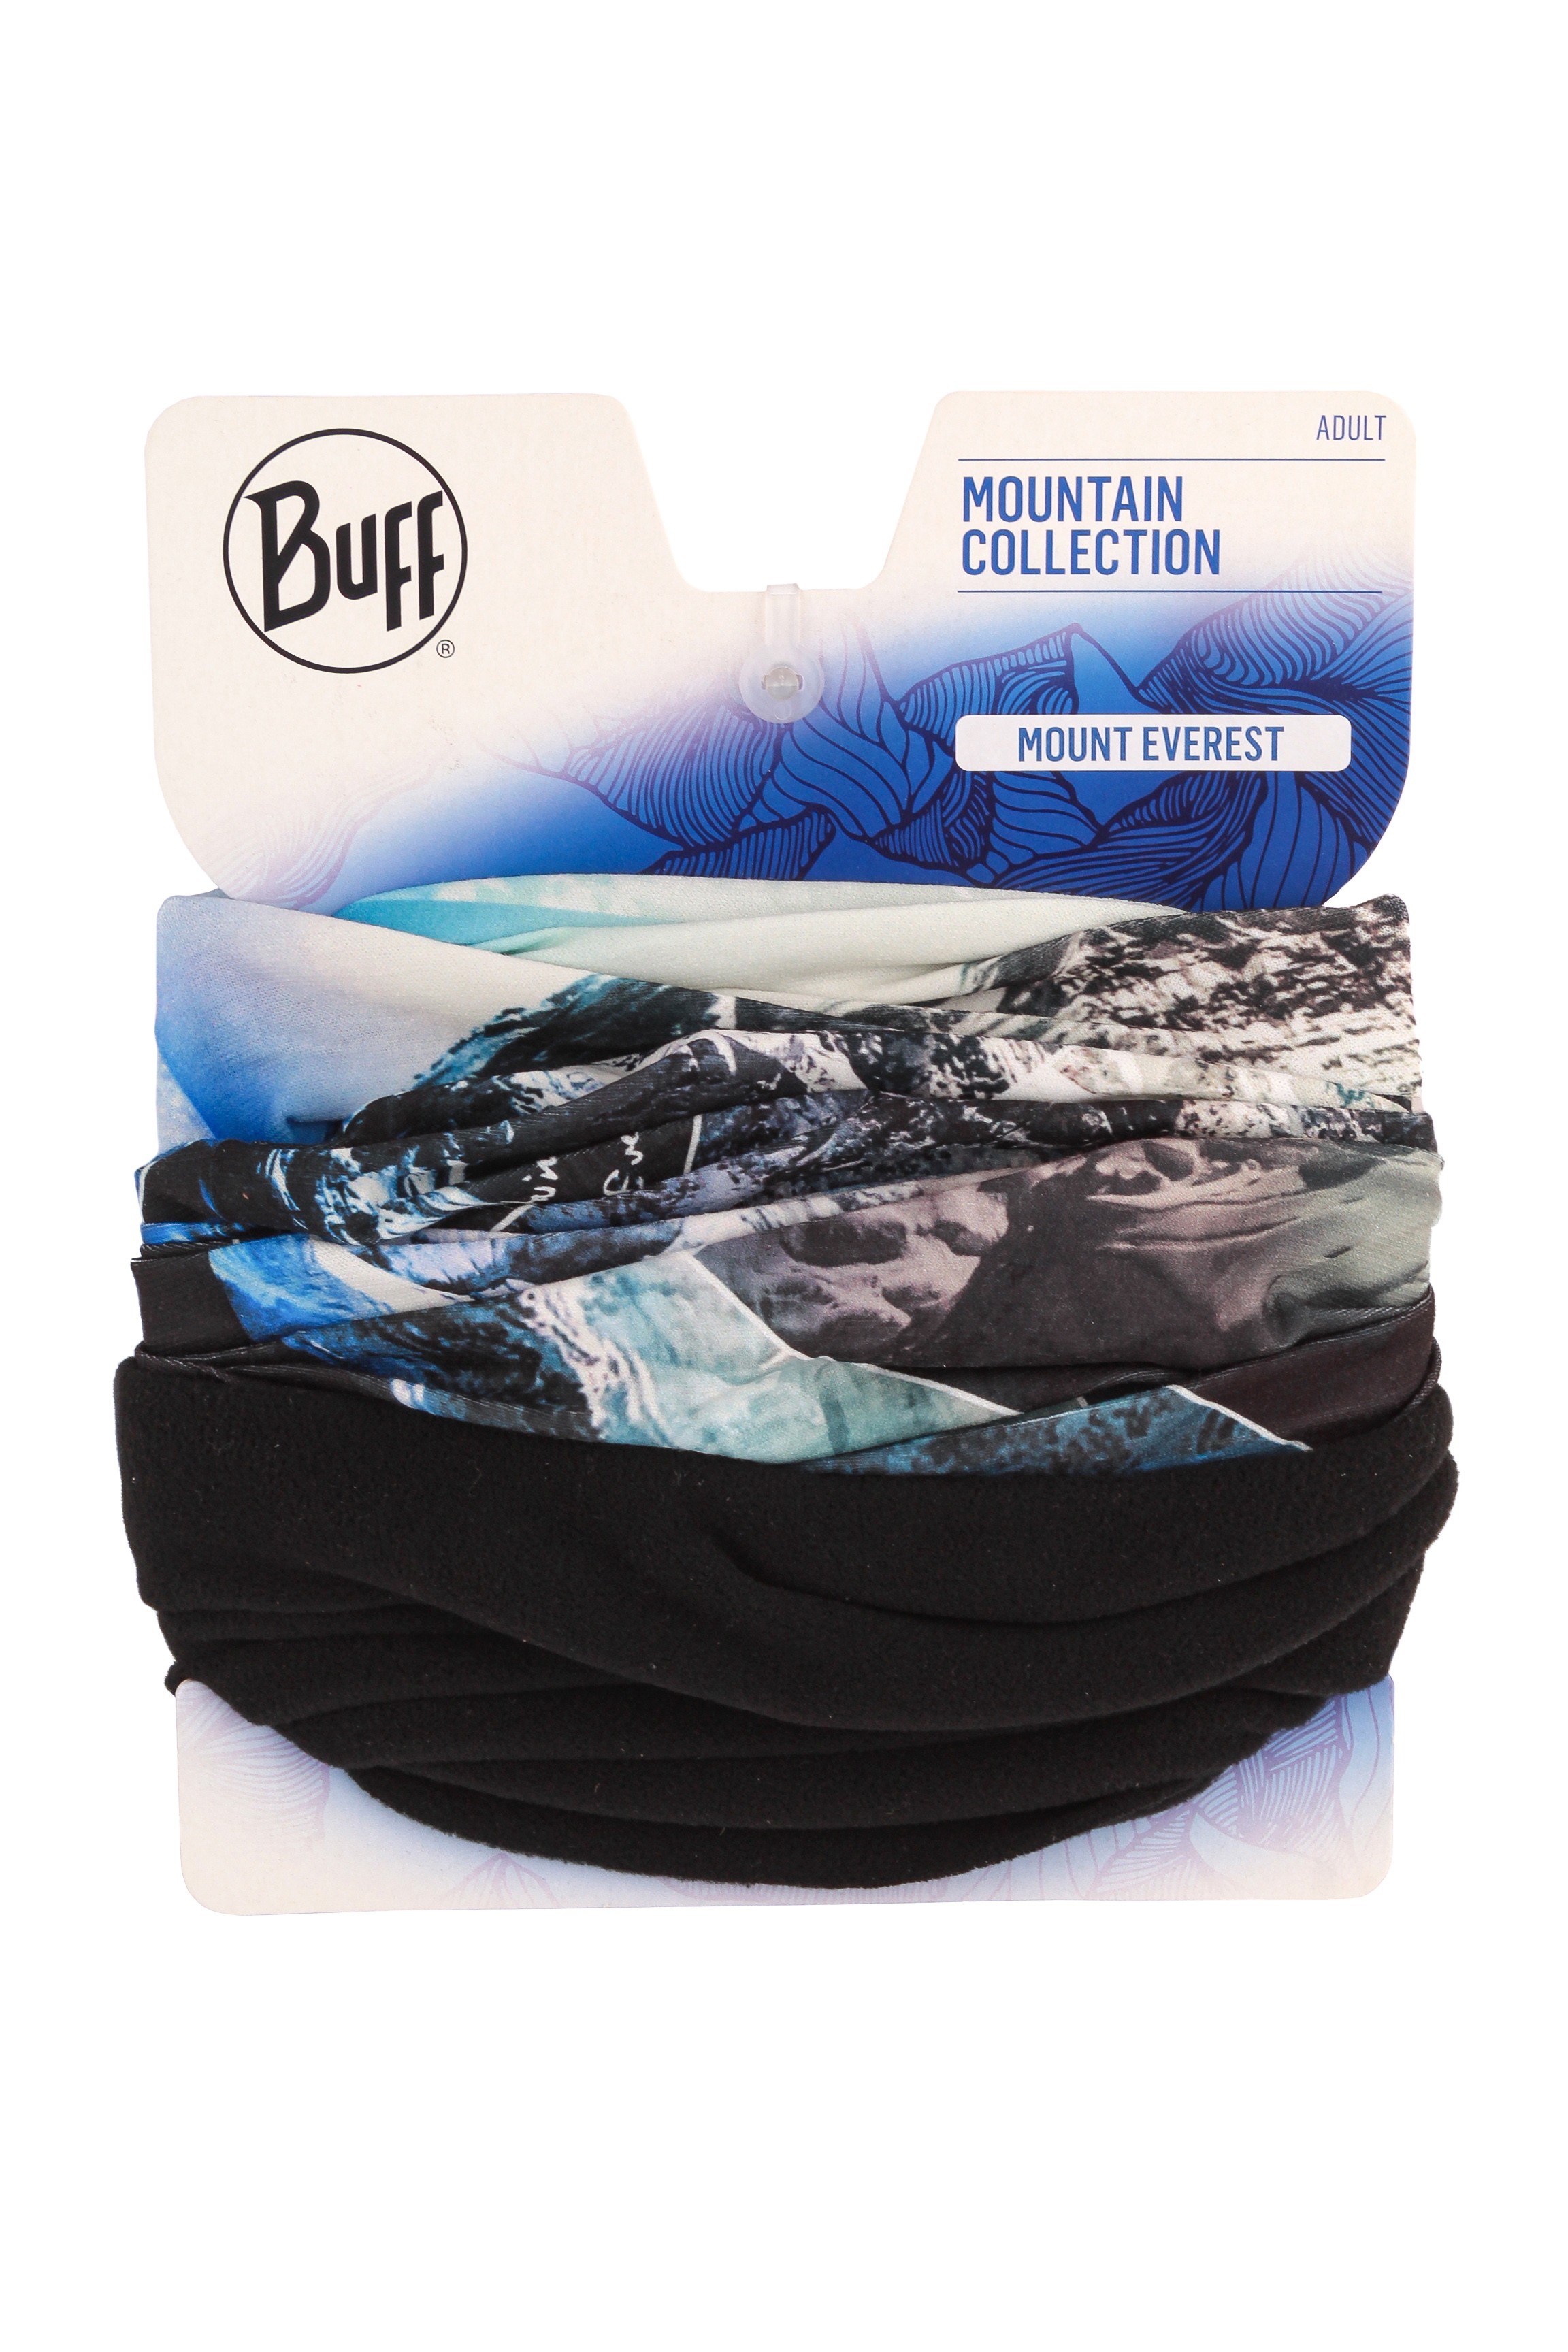 Бандана Buff Mountain collection polar mount everest blue  - фото 1